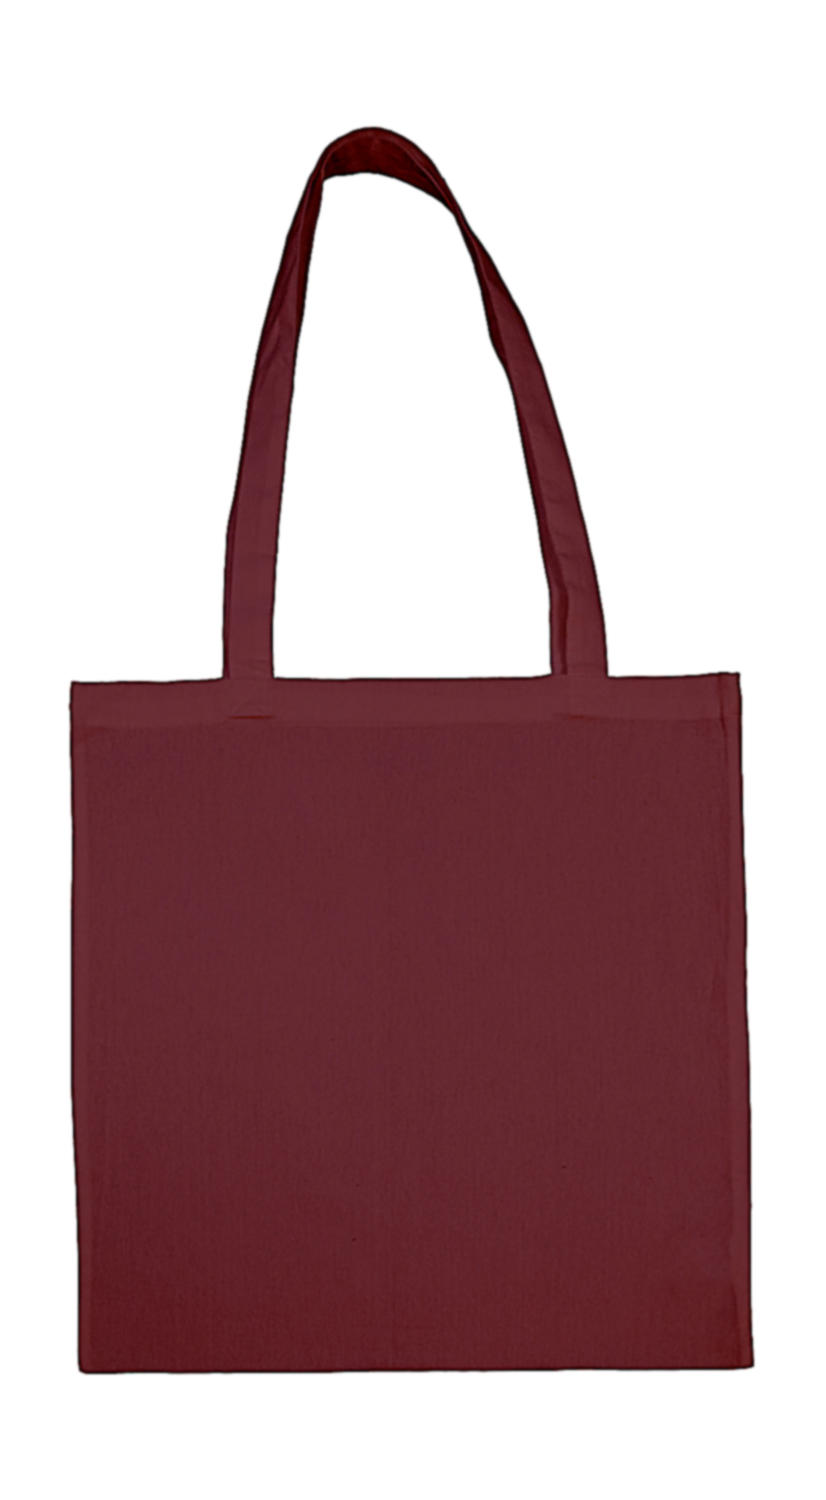  Cotton Bag LH in Farbe Burgundy